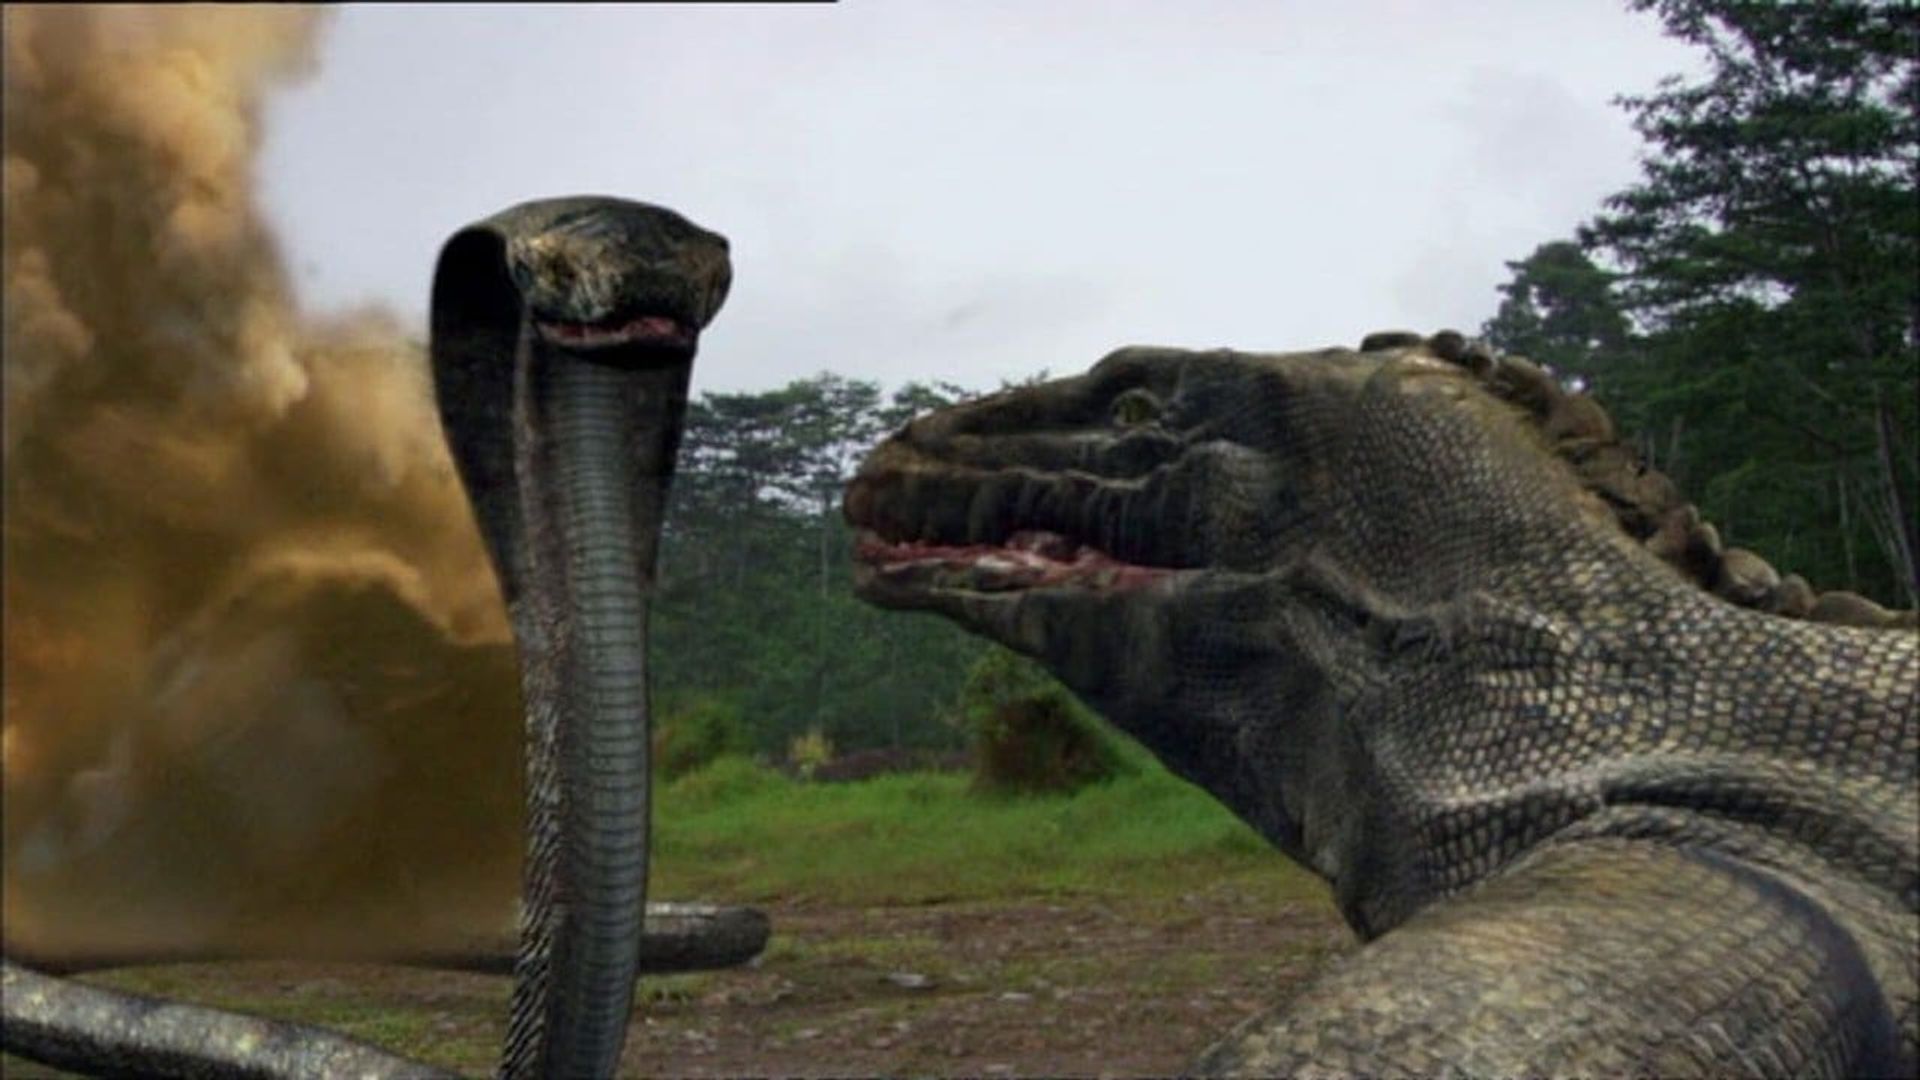 Komodo vs. Cobra background